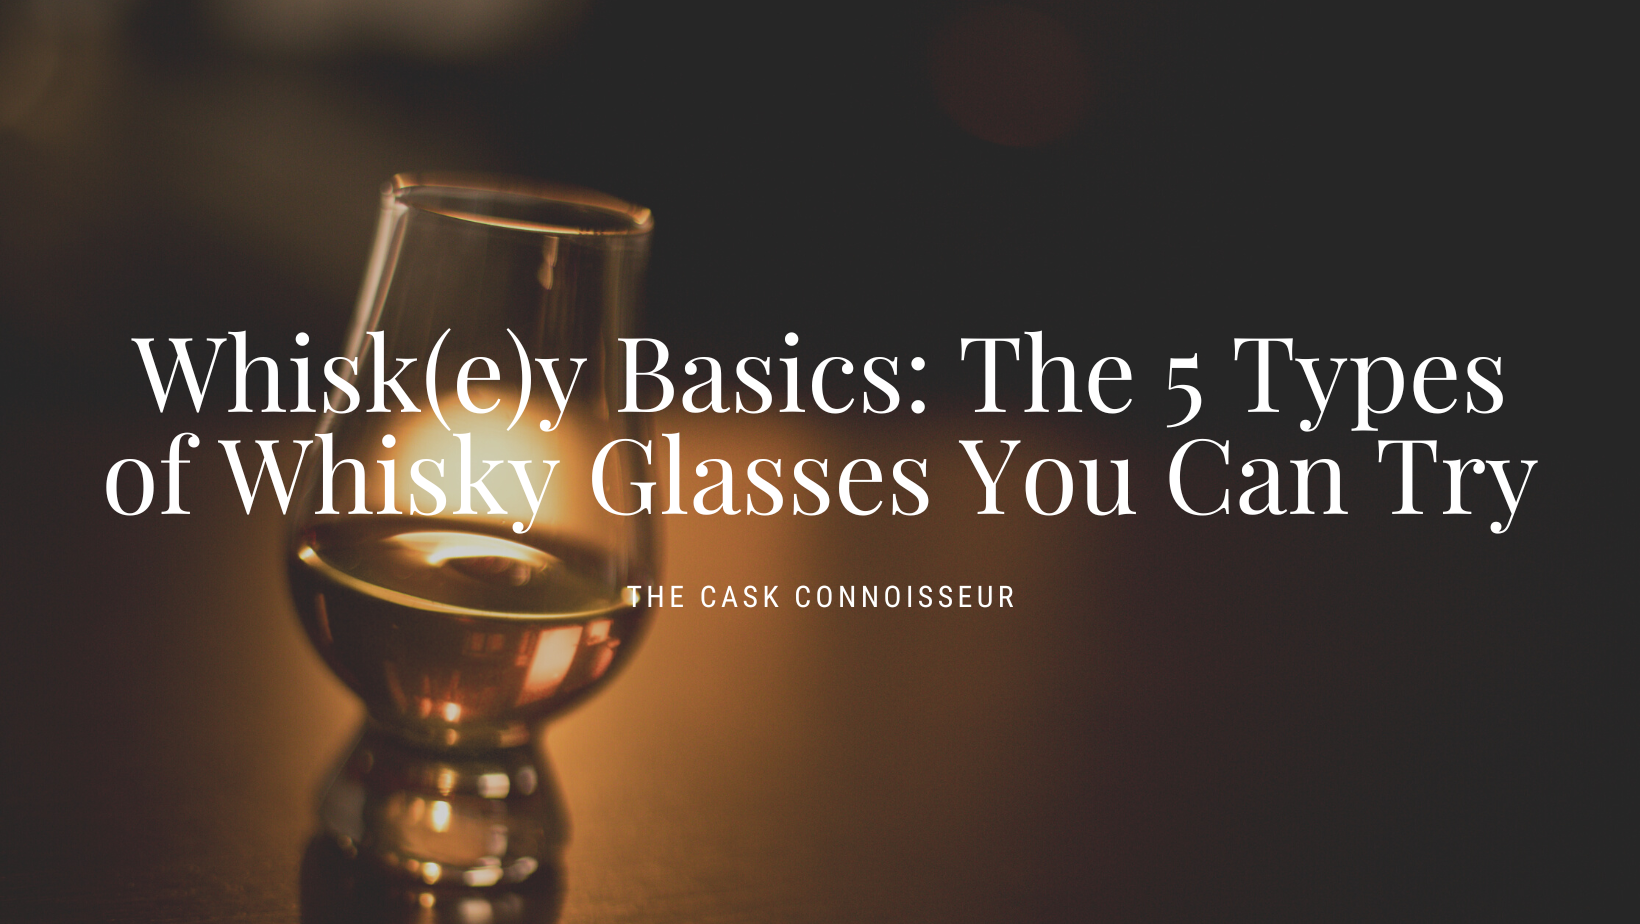 The Norlan whisky glass looks like a smart idea